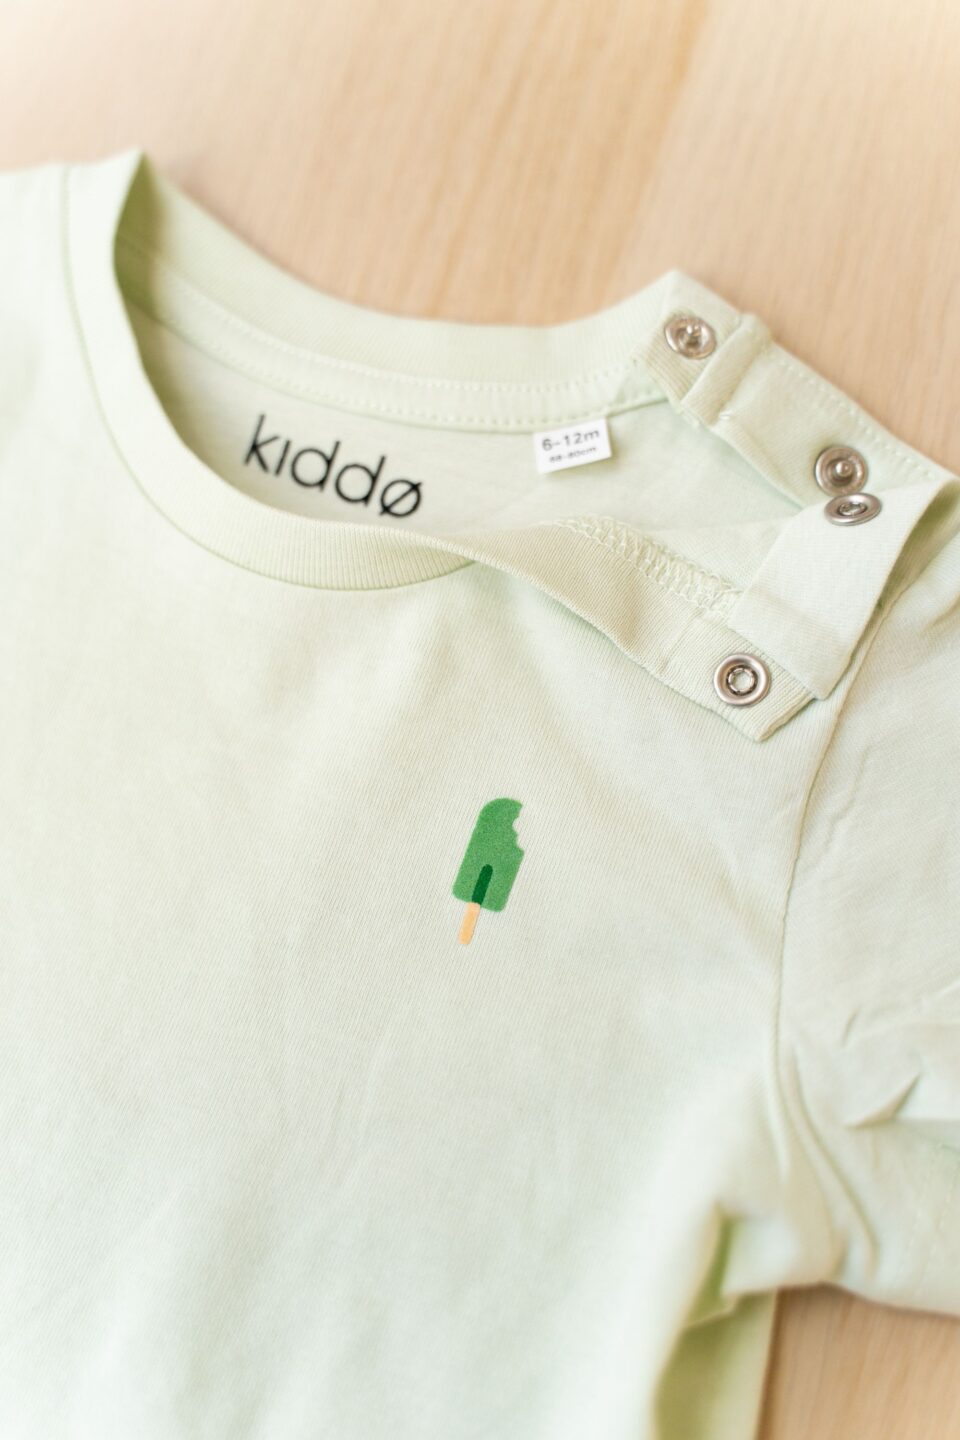 Kiddo_Kids Shirt_Minimal_Mint Green_Green Ice Cream